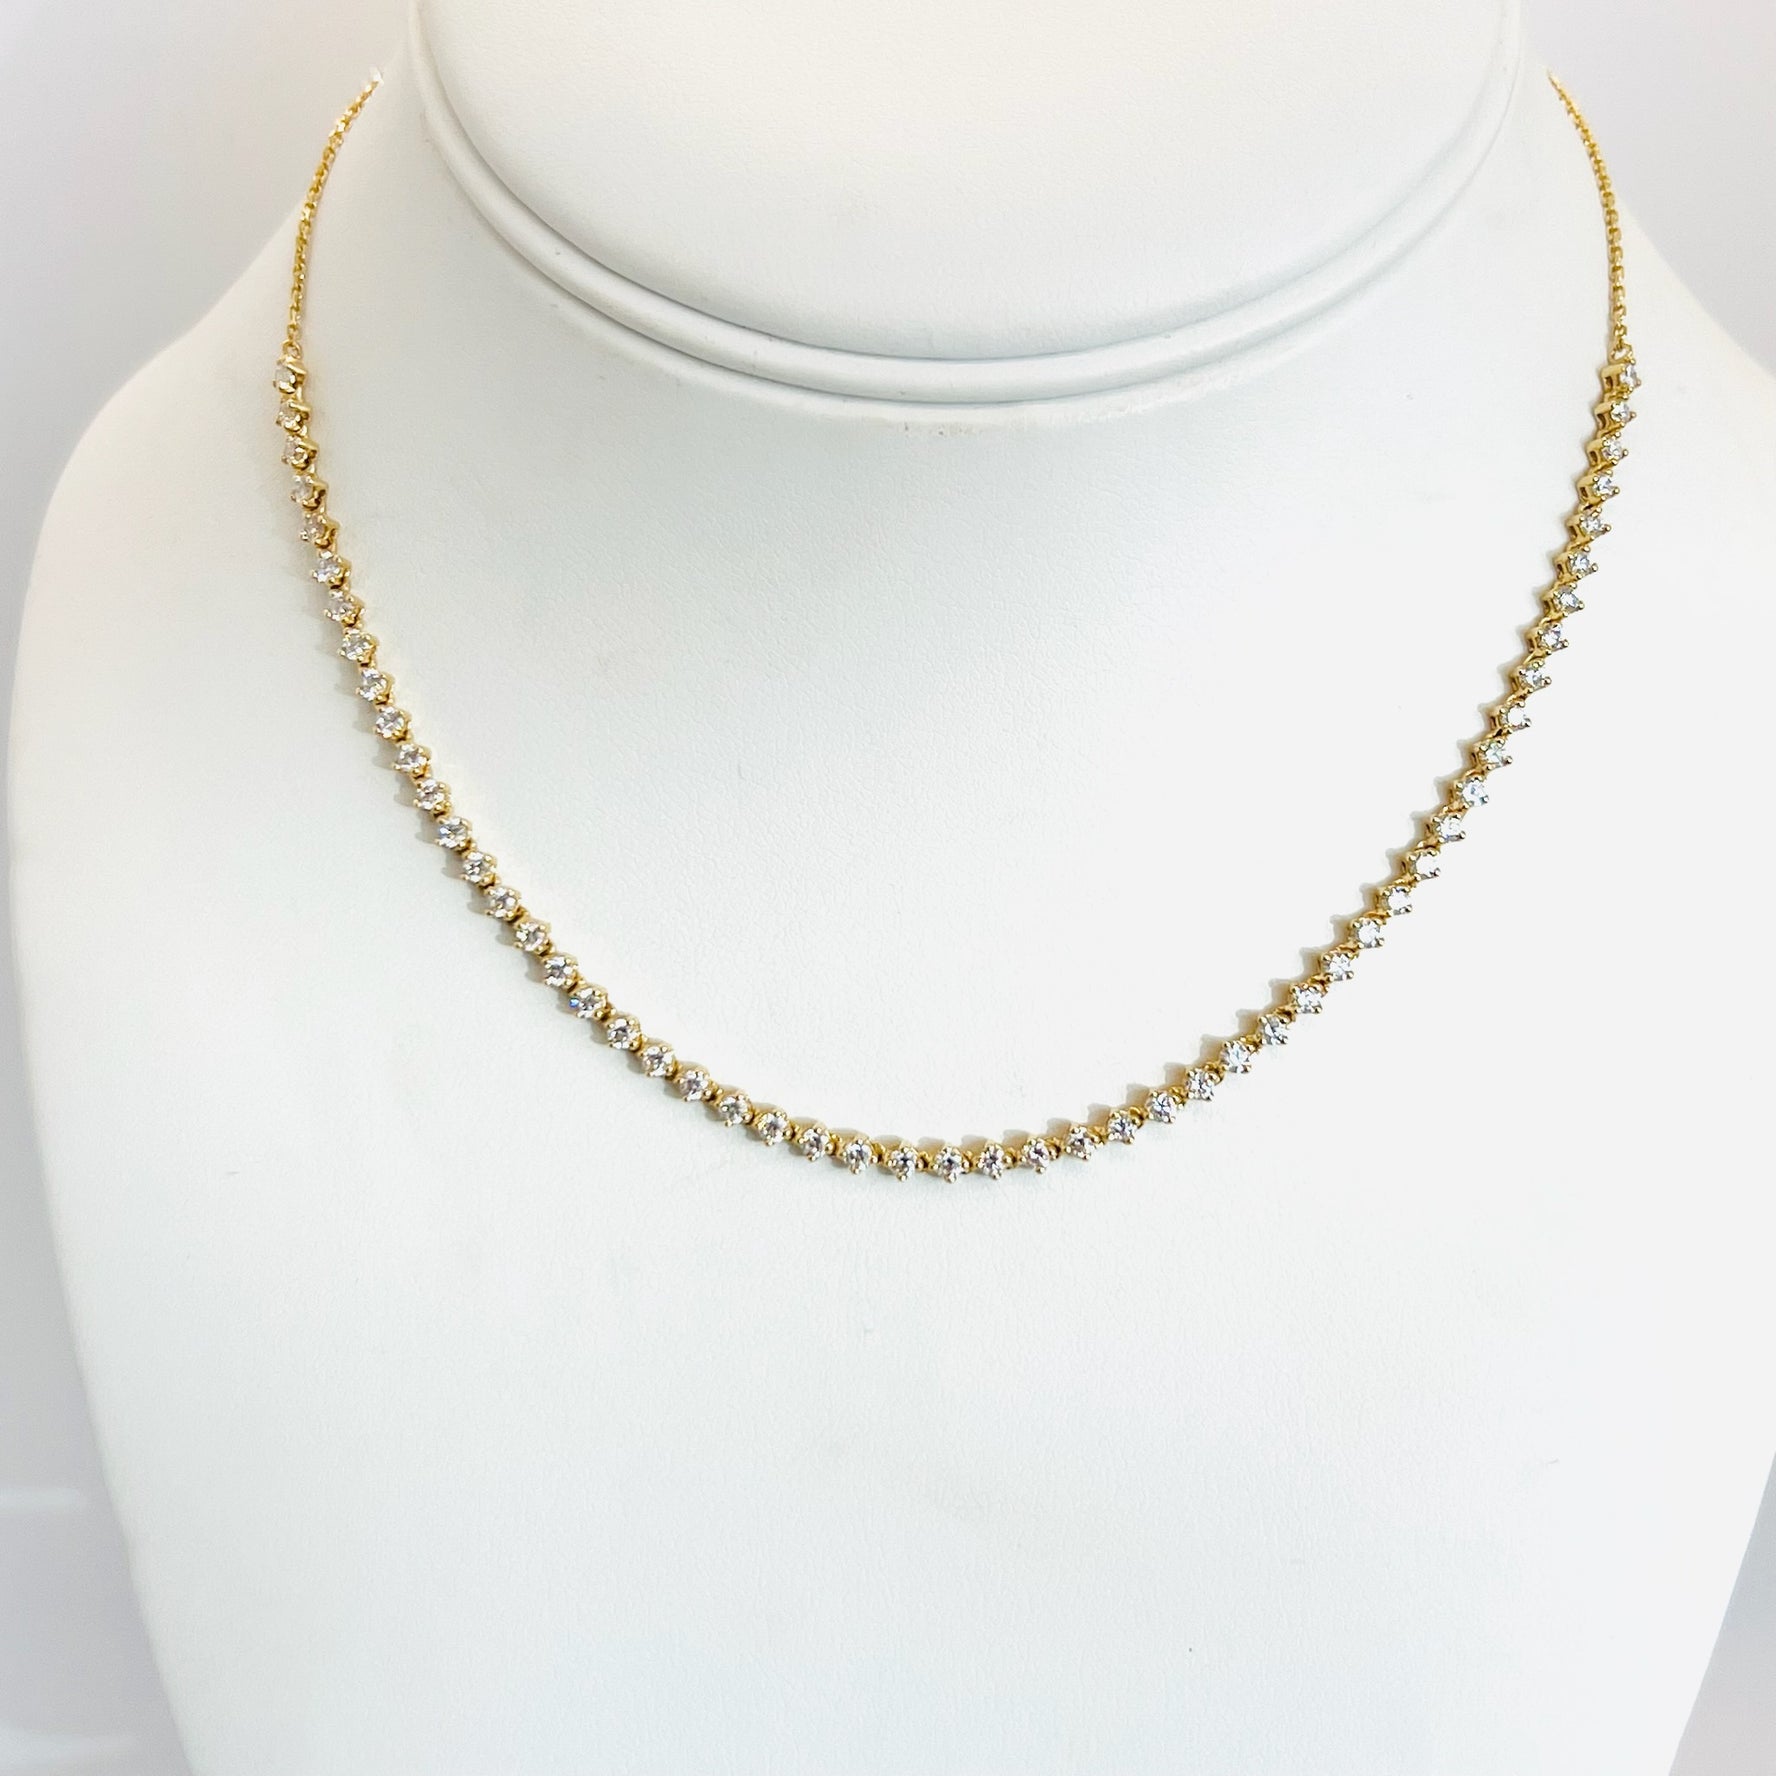 Adjustable 14k gold diamond tennis necklace